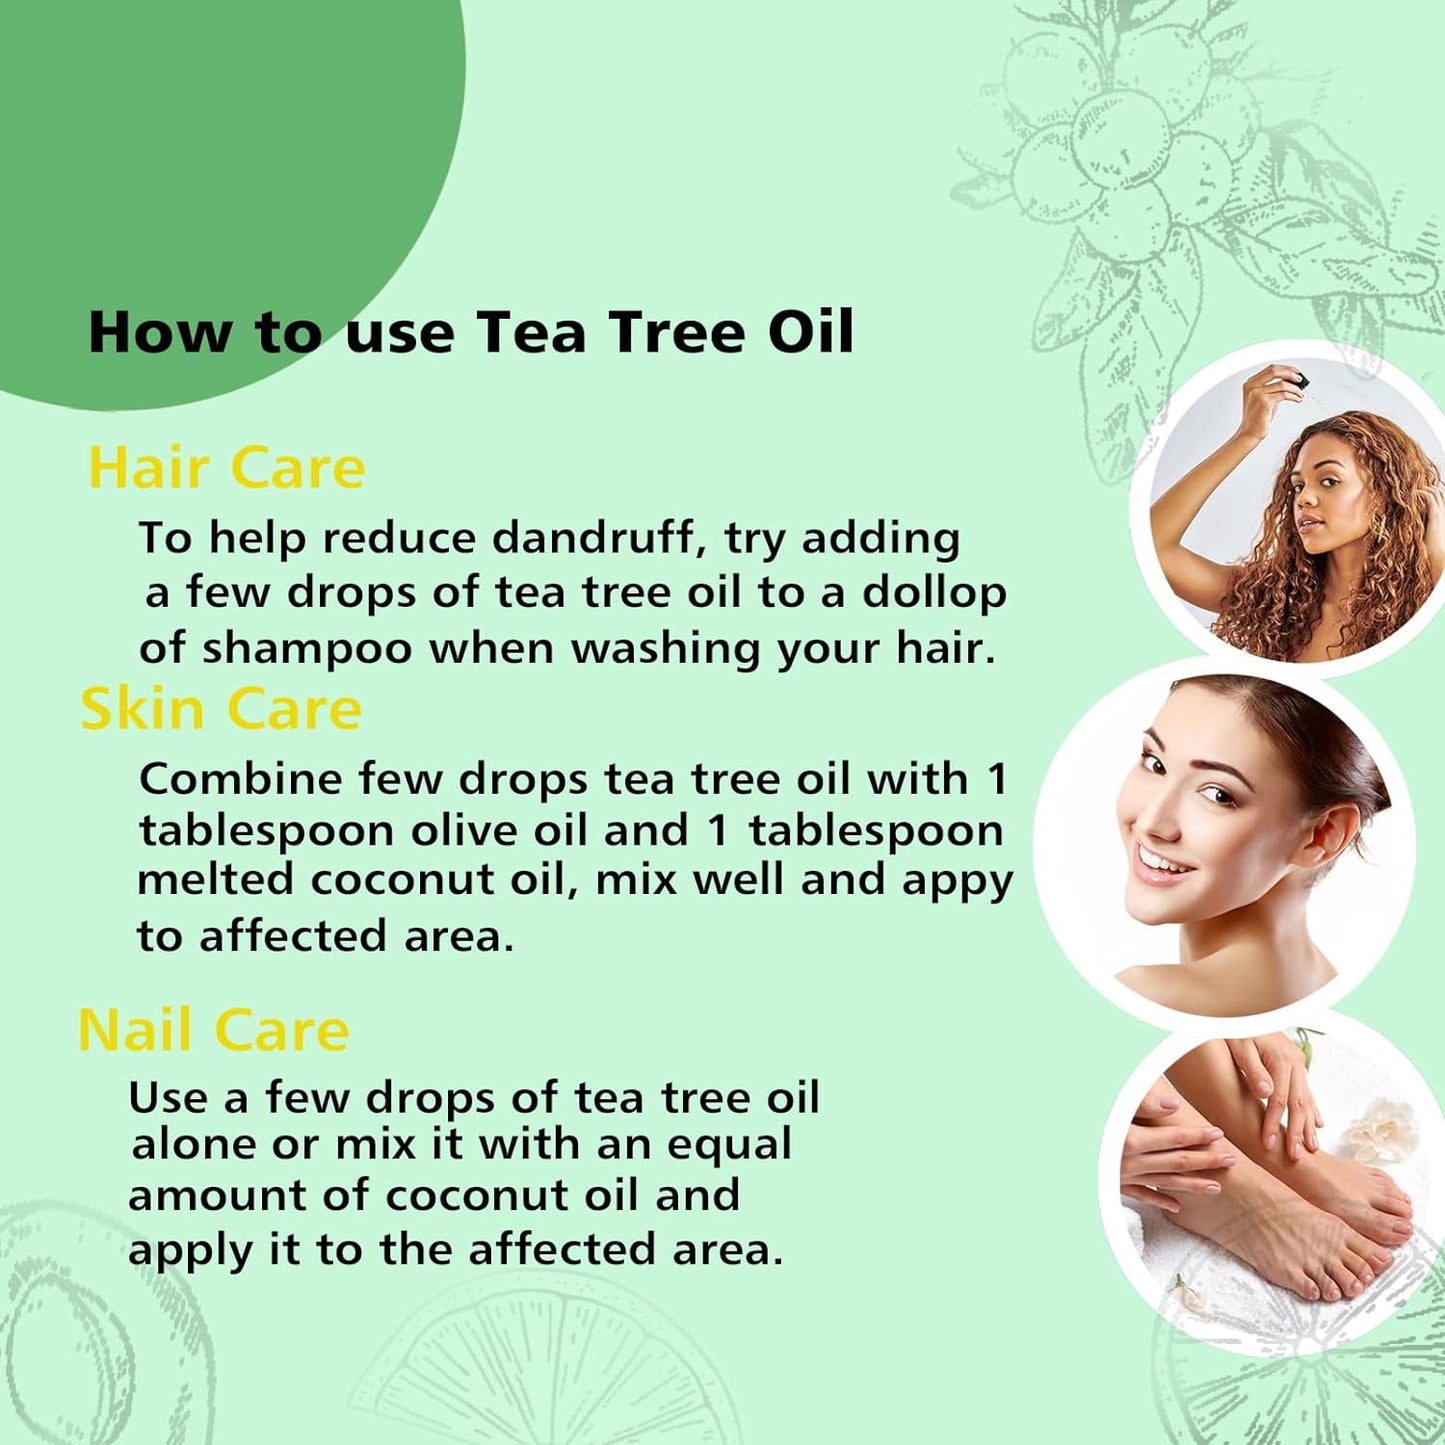 Gm  Tea Tree Oil for Skin, Hair, Nail Fungus, Face Body Wash, Foot Soak, Spray, 100% Pure Tea Tree Essential Oil - 30Ml